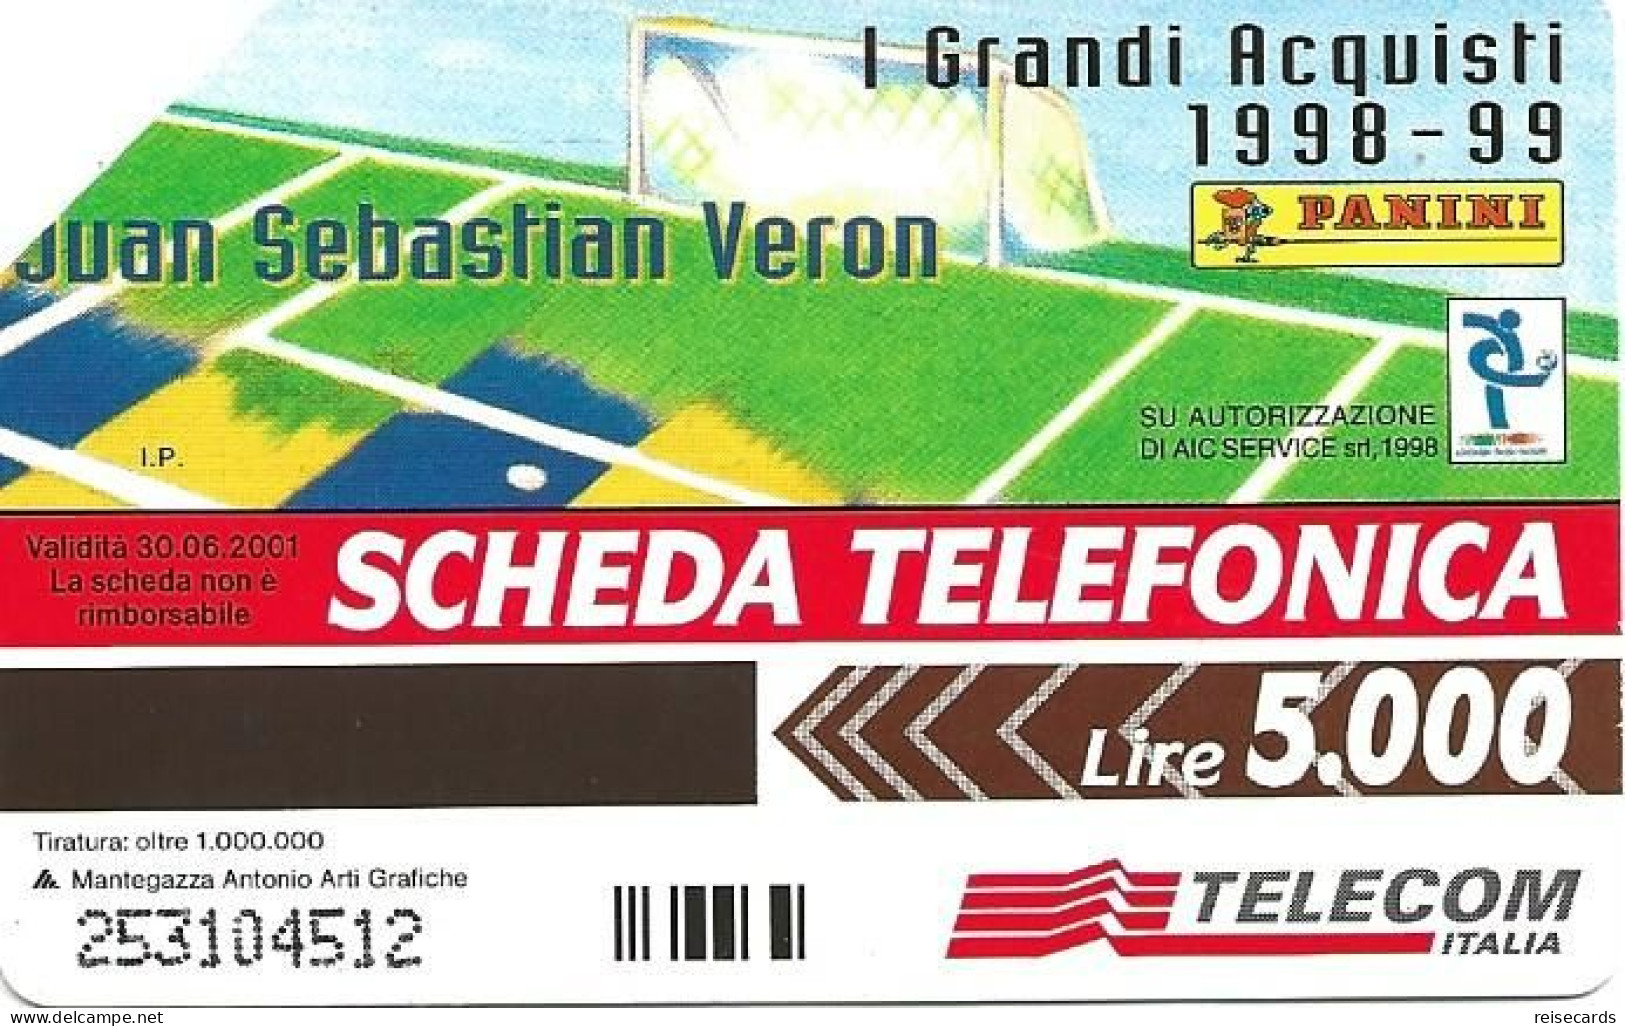 Italy: Telecom Italia - Panini, I Grandi Acquisti, Juan Sebastian Veron - Public Advertising